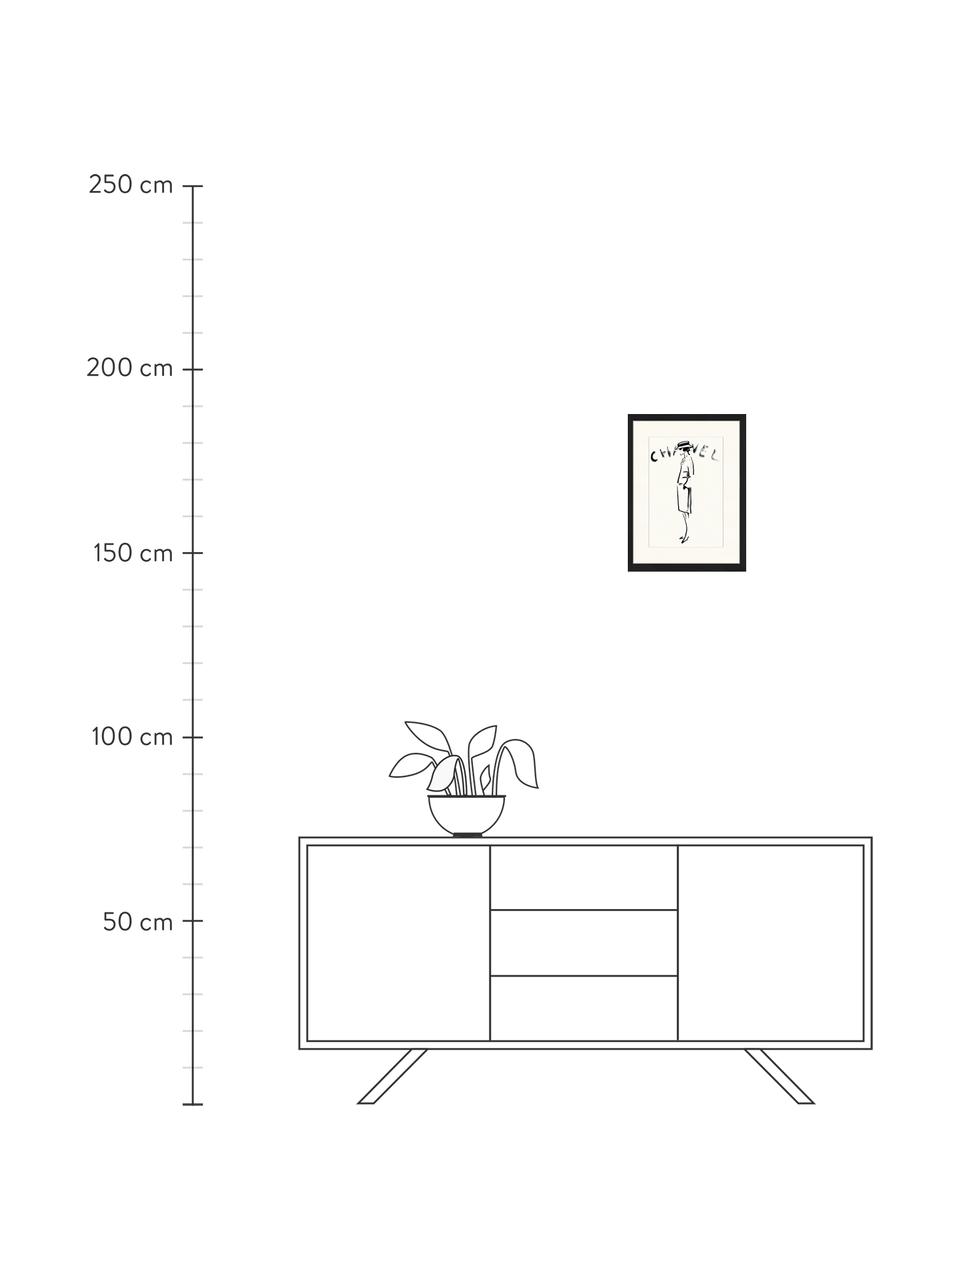 Ingelijste digitale print Chanel, Afbeelding: digitale print op papier,, Lijst: gelakt hout, Zwart, wit, 33 x 43 cm